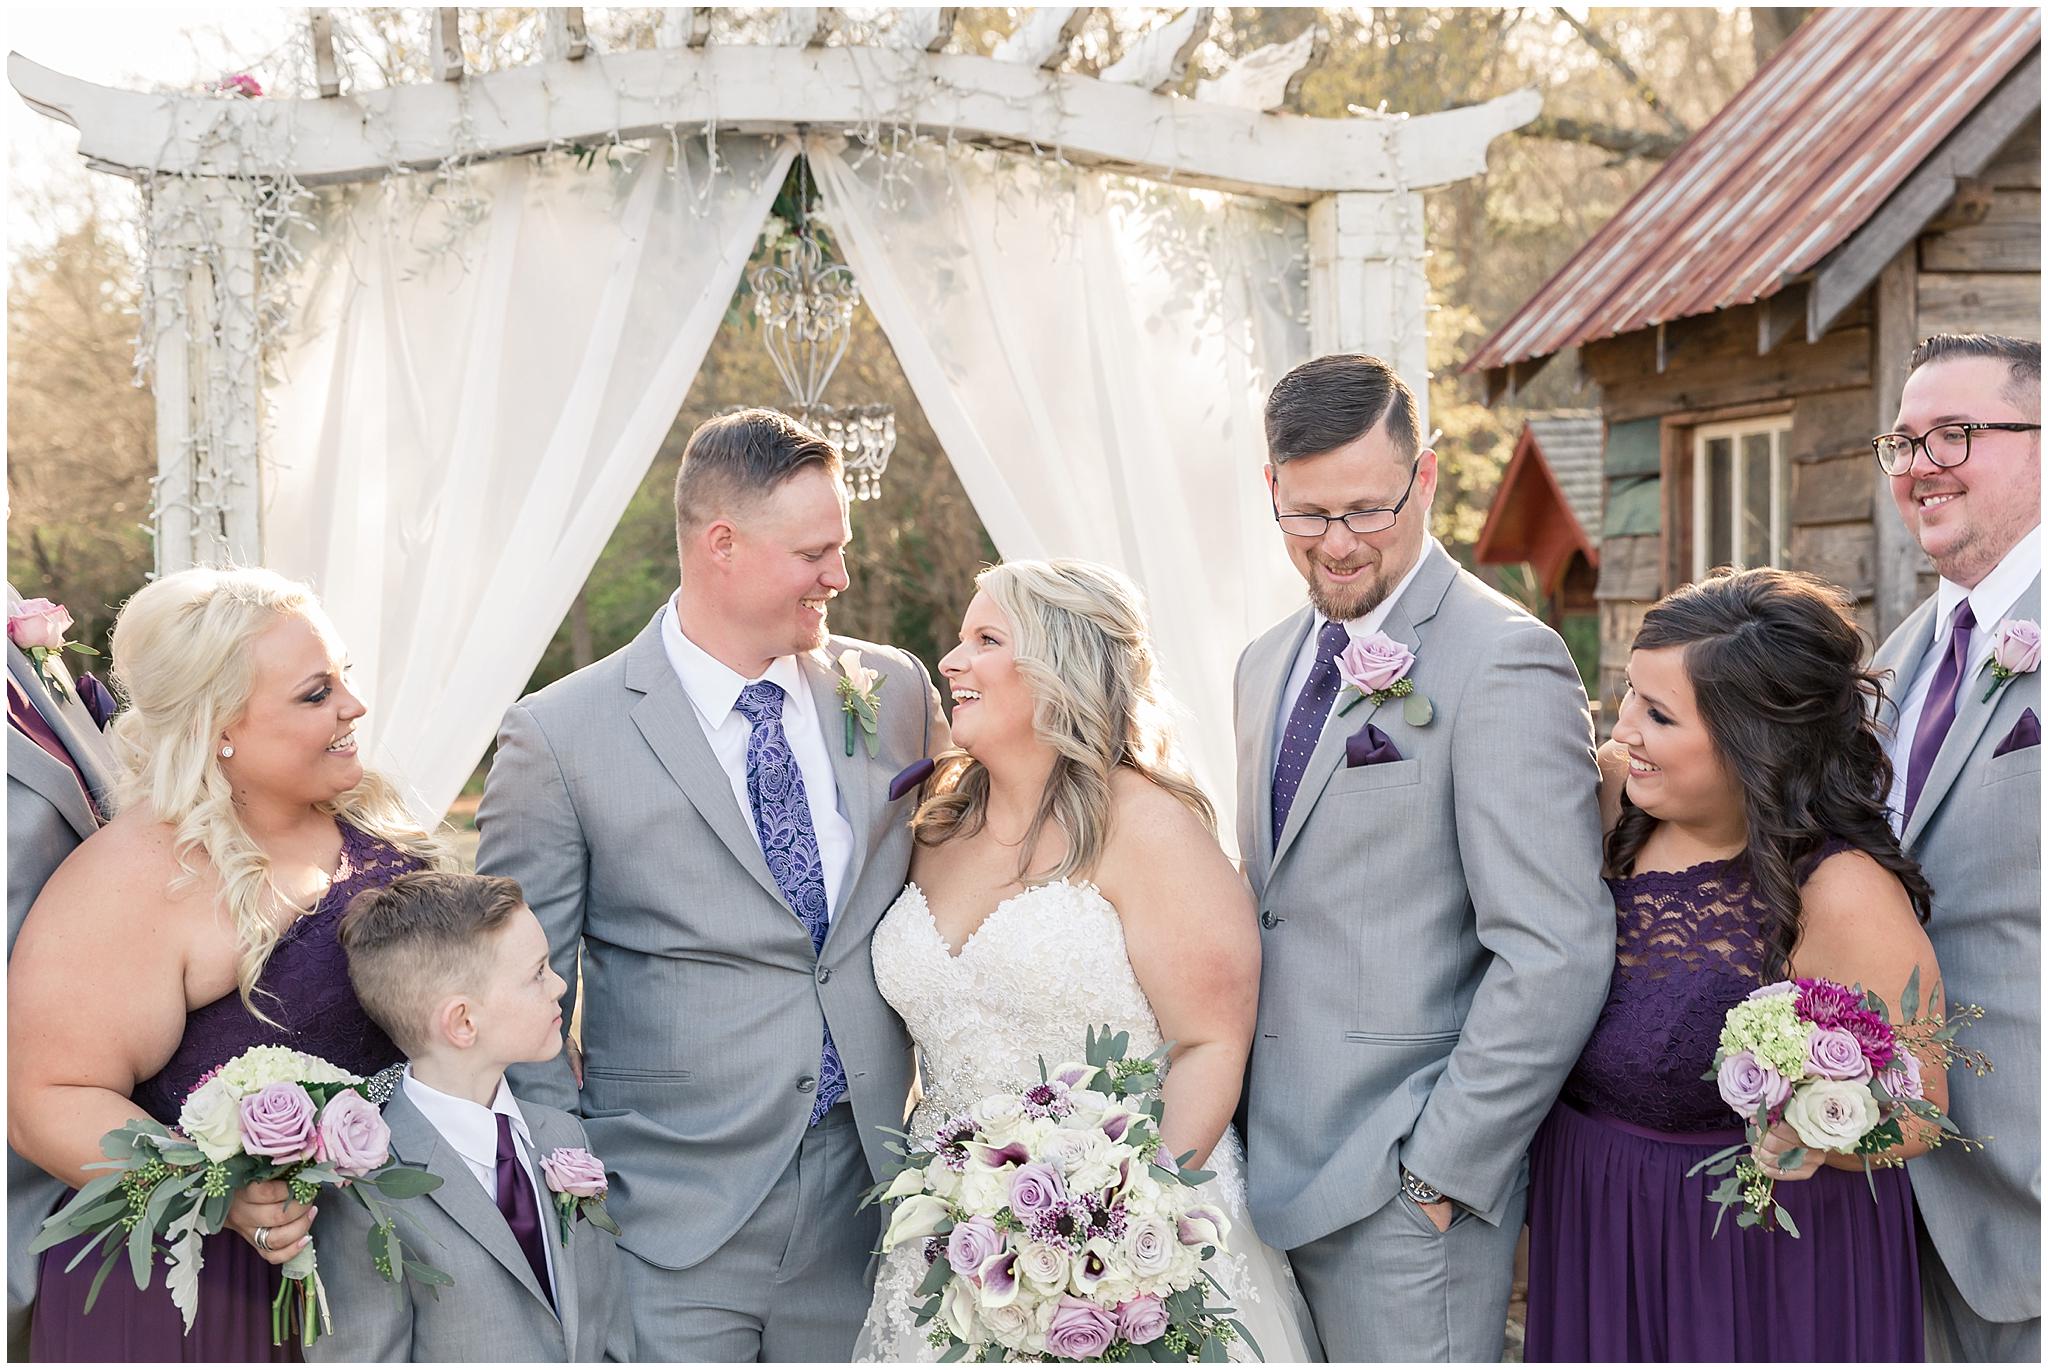 9 oaks farm wedding party bridesmaids groomsmen purple gray suits_0003.jpg